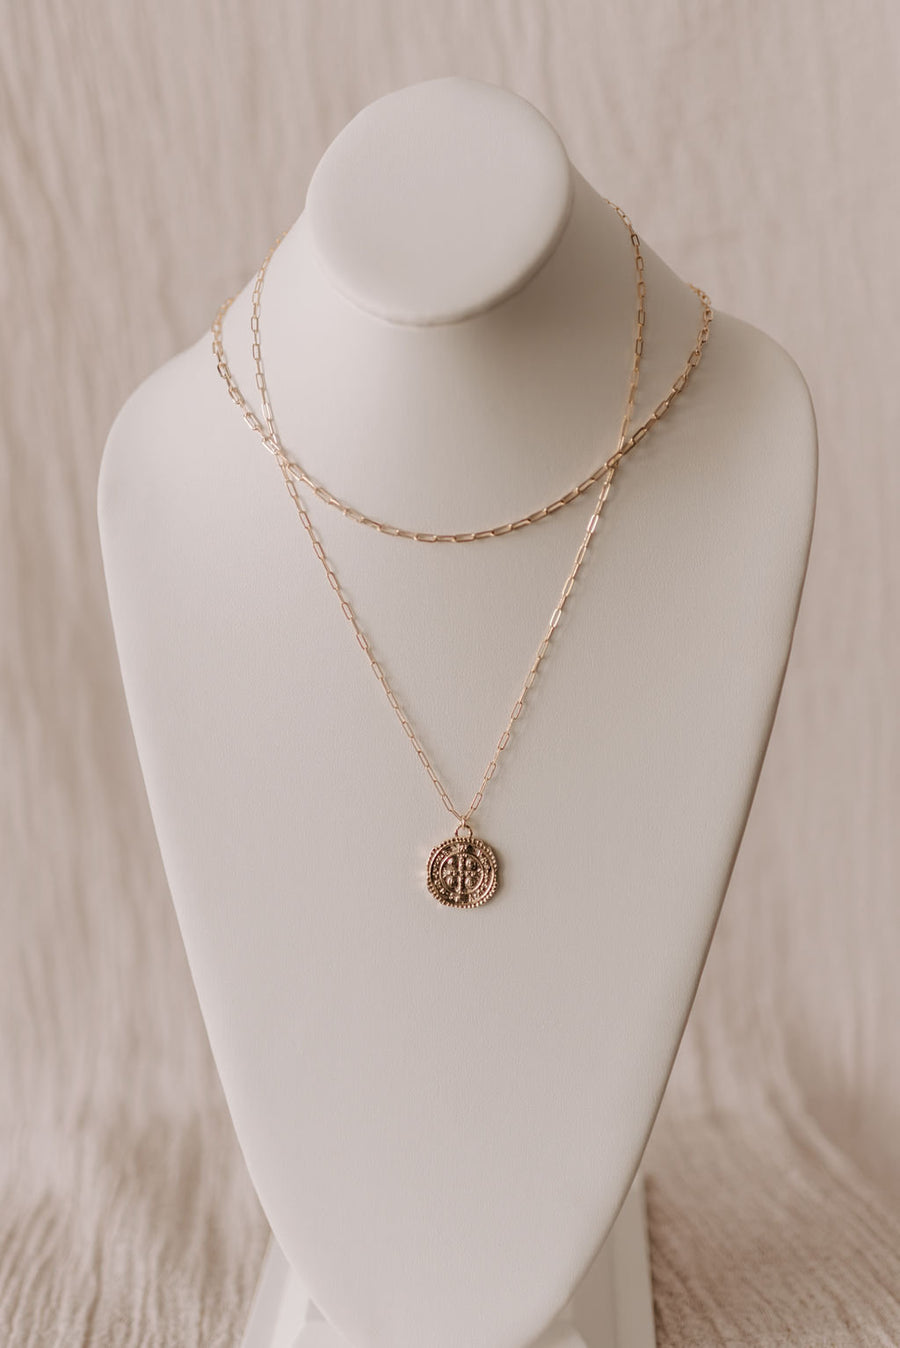 Cross Pendant, Cross Necklace, Handmade Jewelry, Coin Pendant, Personalized, Custom Jewelry, Gold Jewelry, Link Chain, Birthday Gift